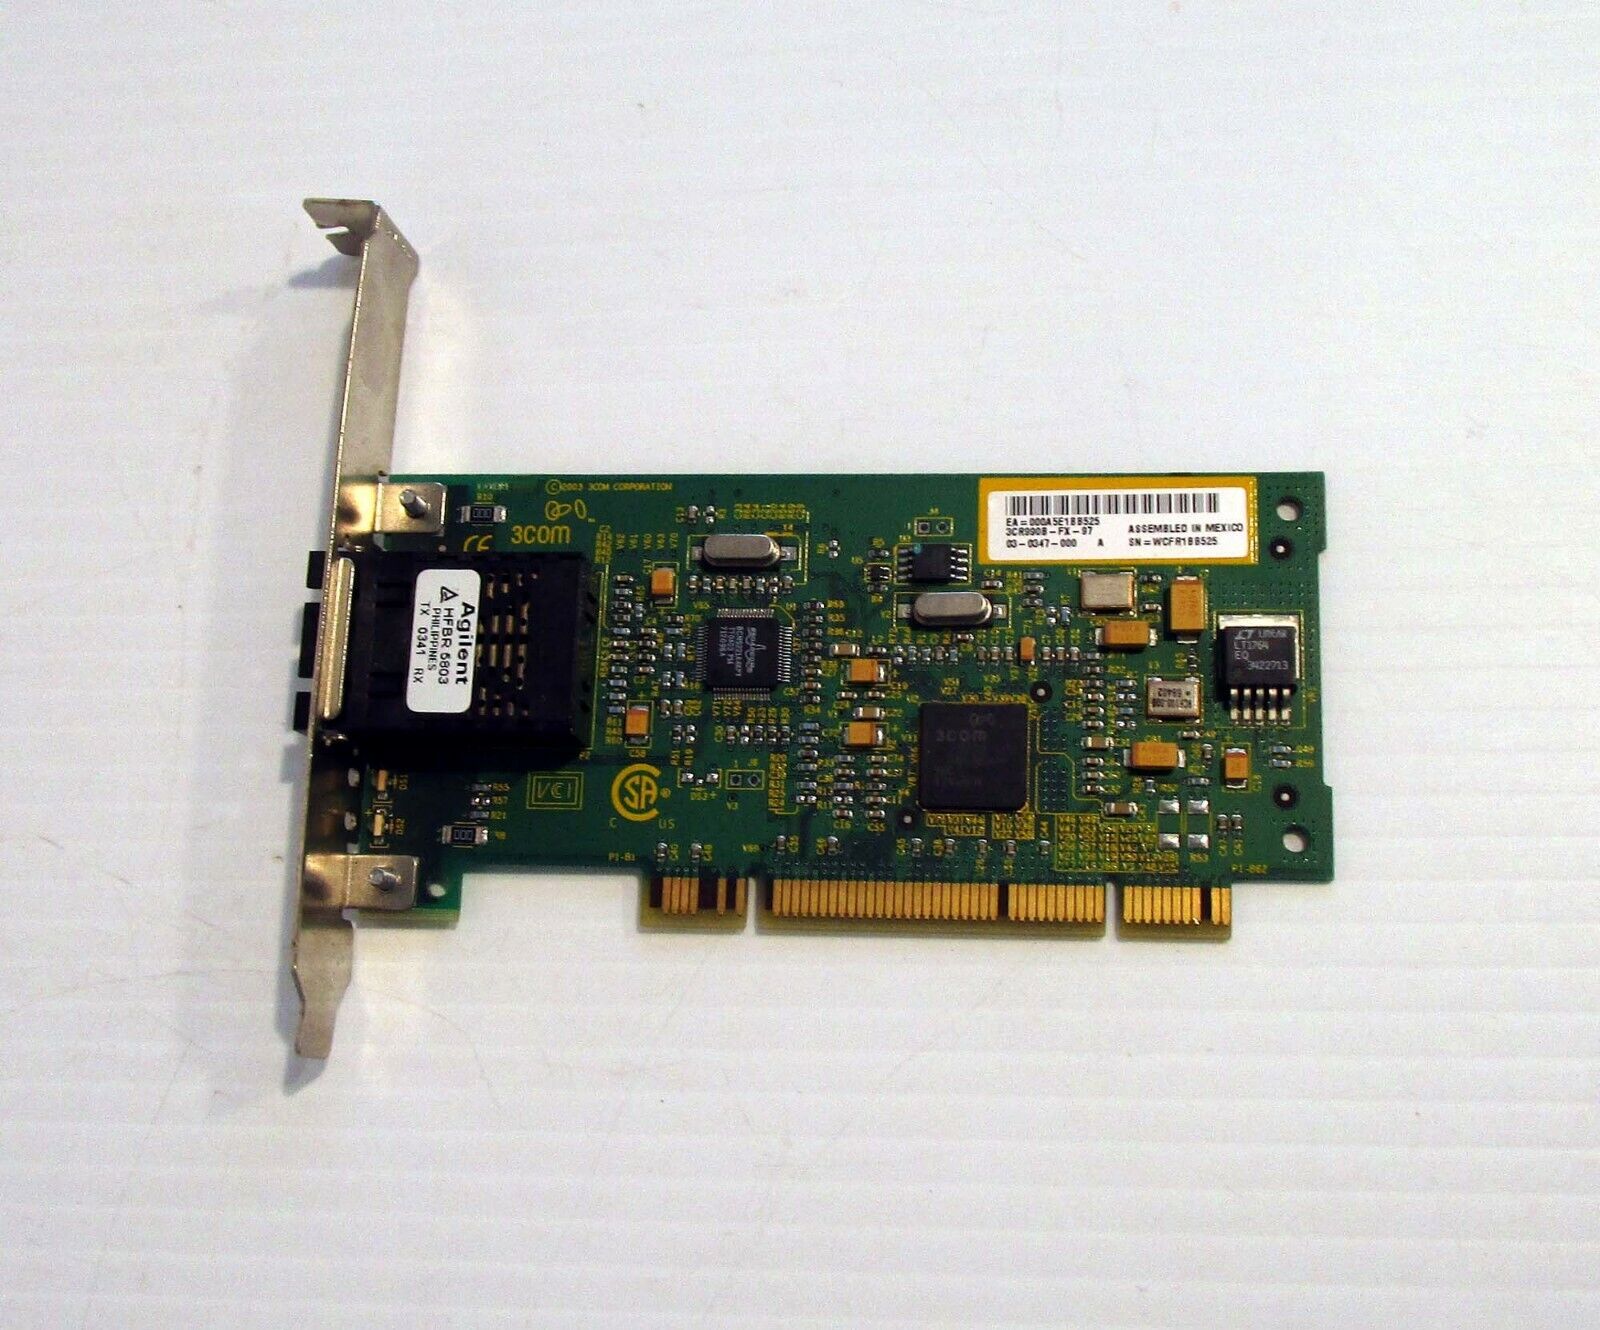 3COM 3CR990B-FX-97 Secure Fiber-FX PCI Network Interface Card